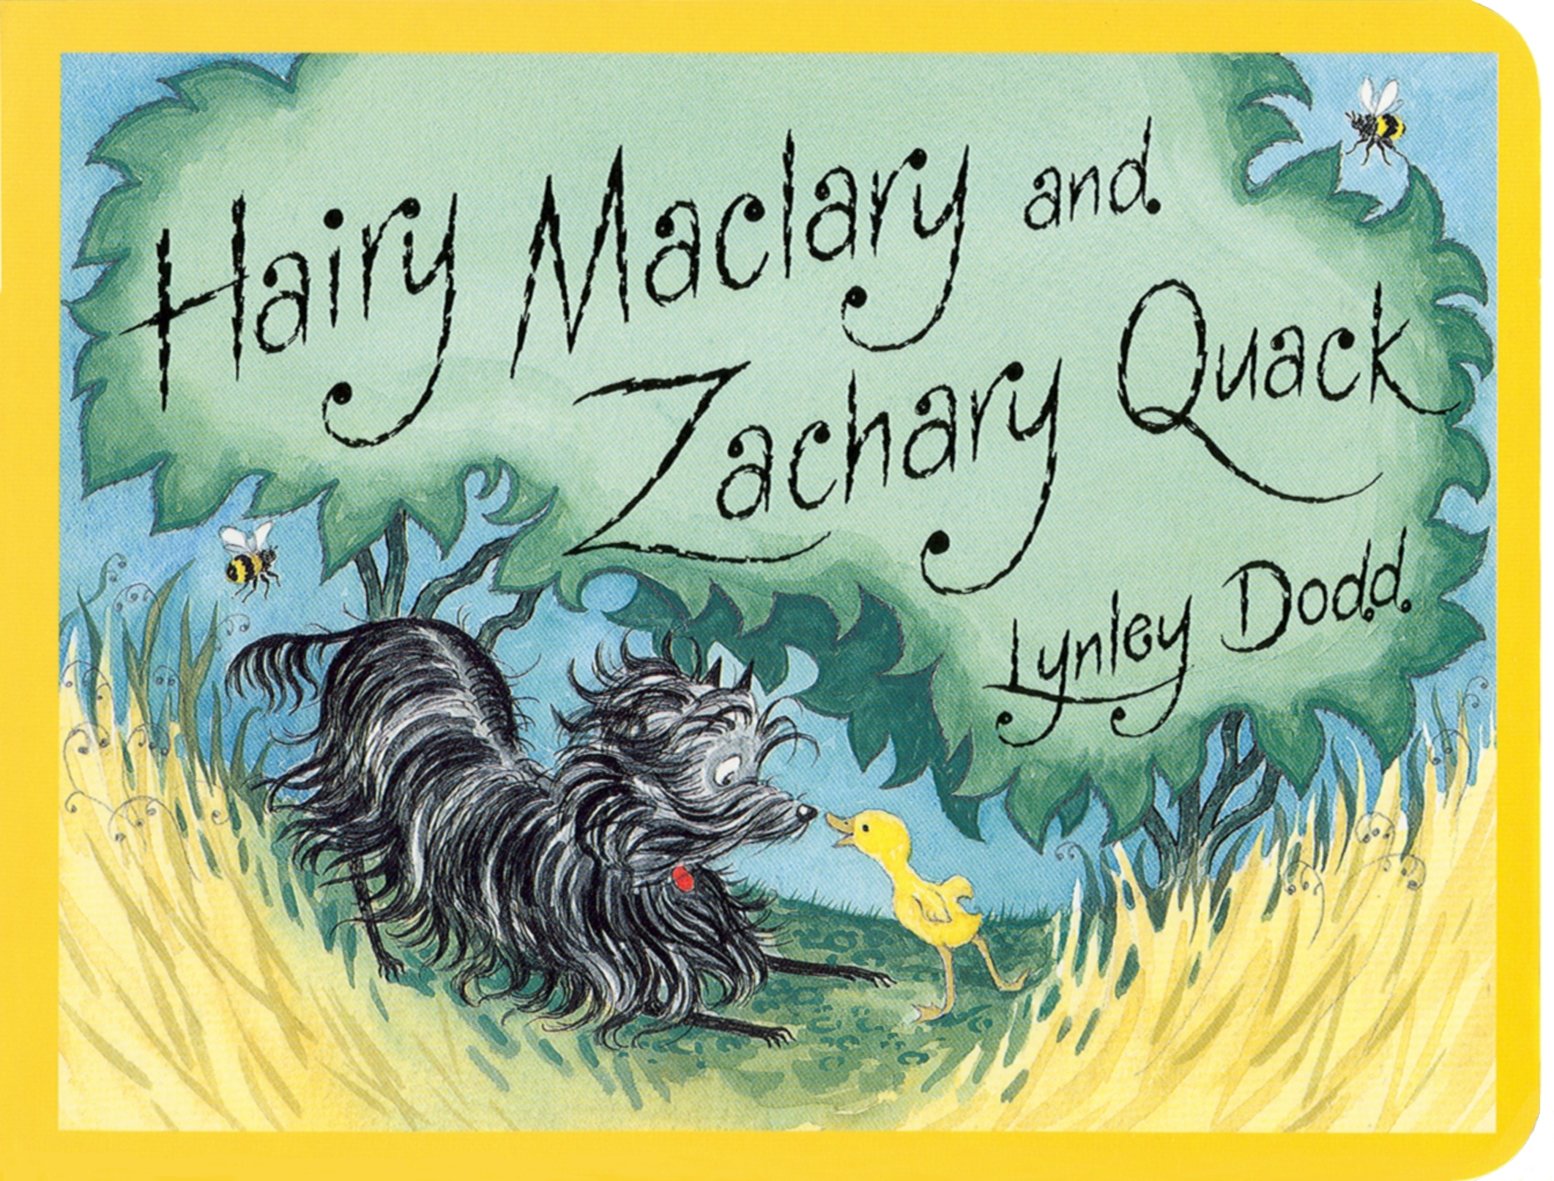 IMG : Hairy Maclary and Zachary Quack